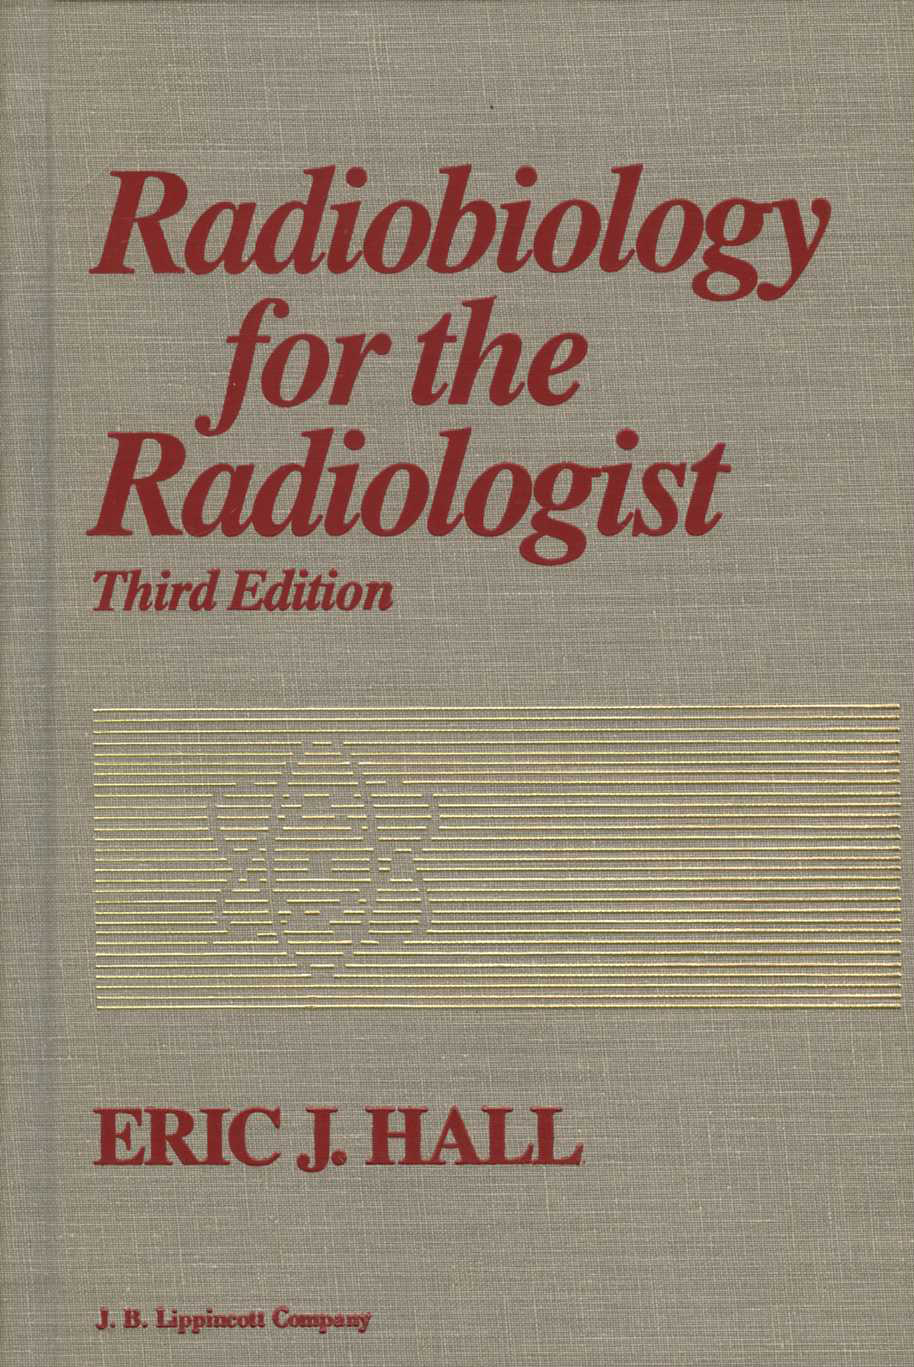 Radiobiology for the radiologist (Eric J. Hall)